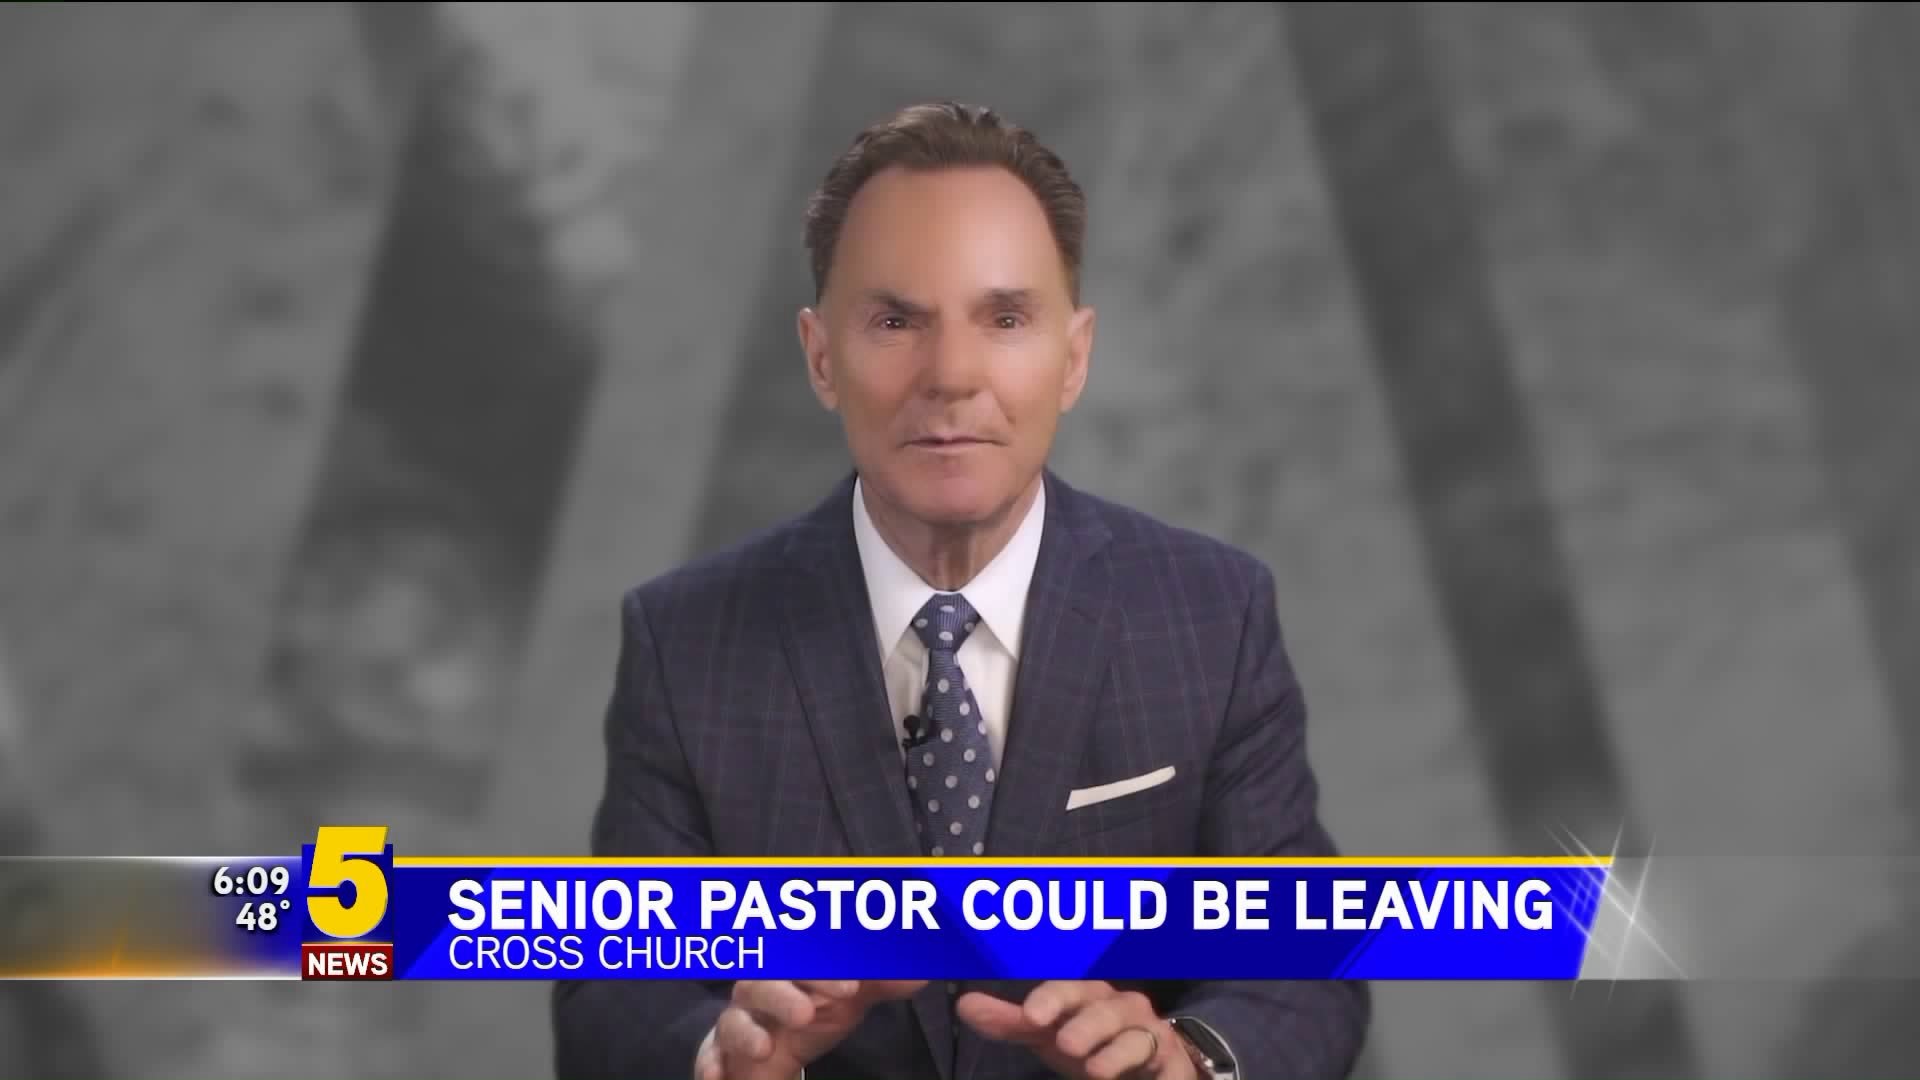 Senior Pastor Could Be Leaving Crosschurch